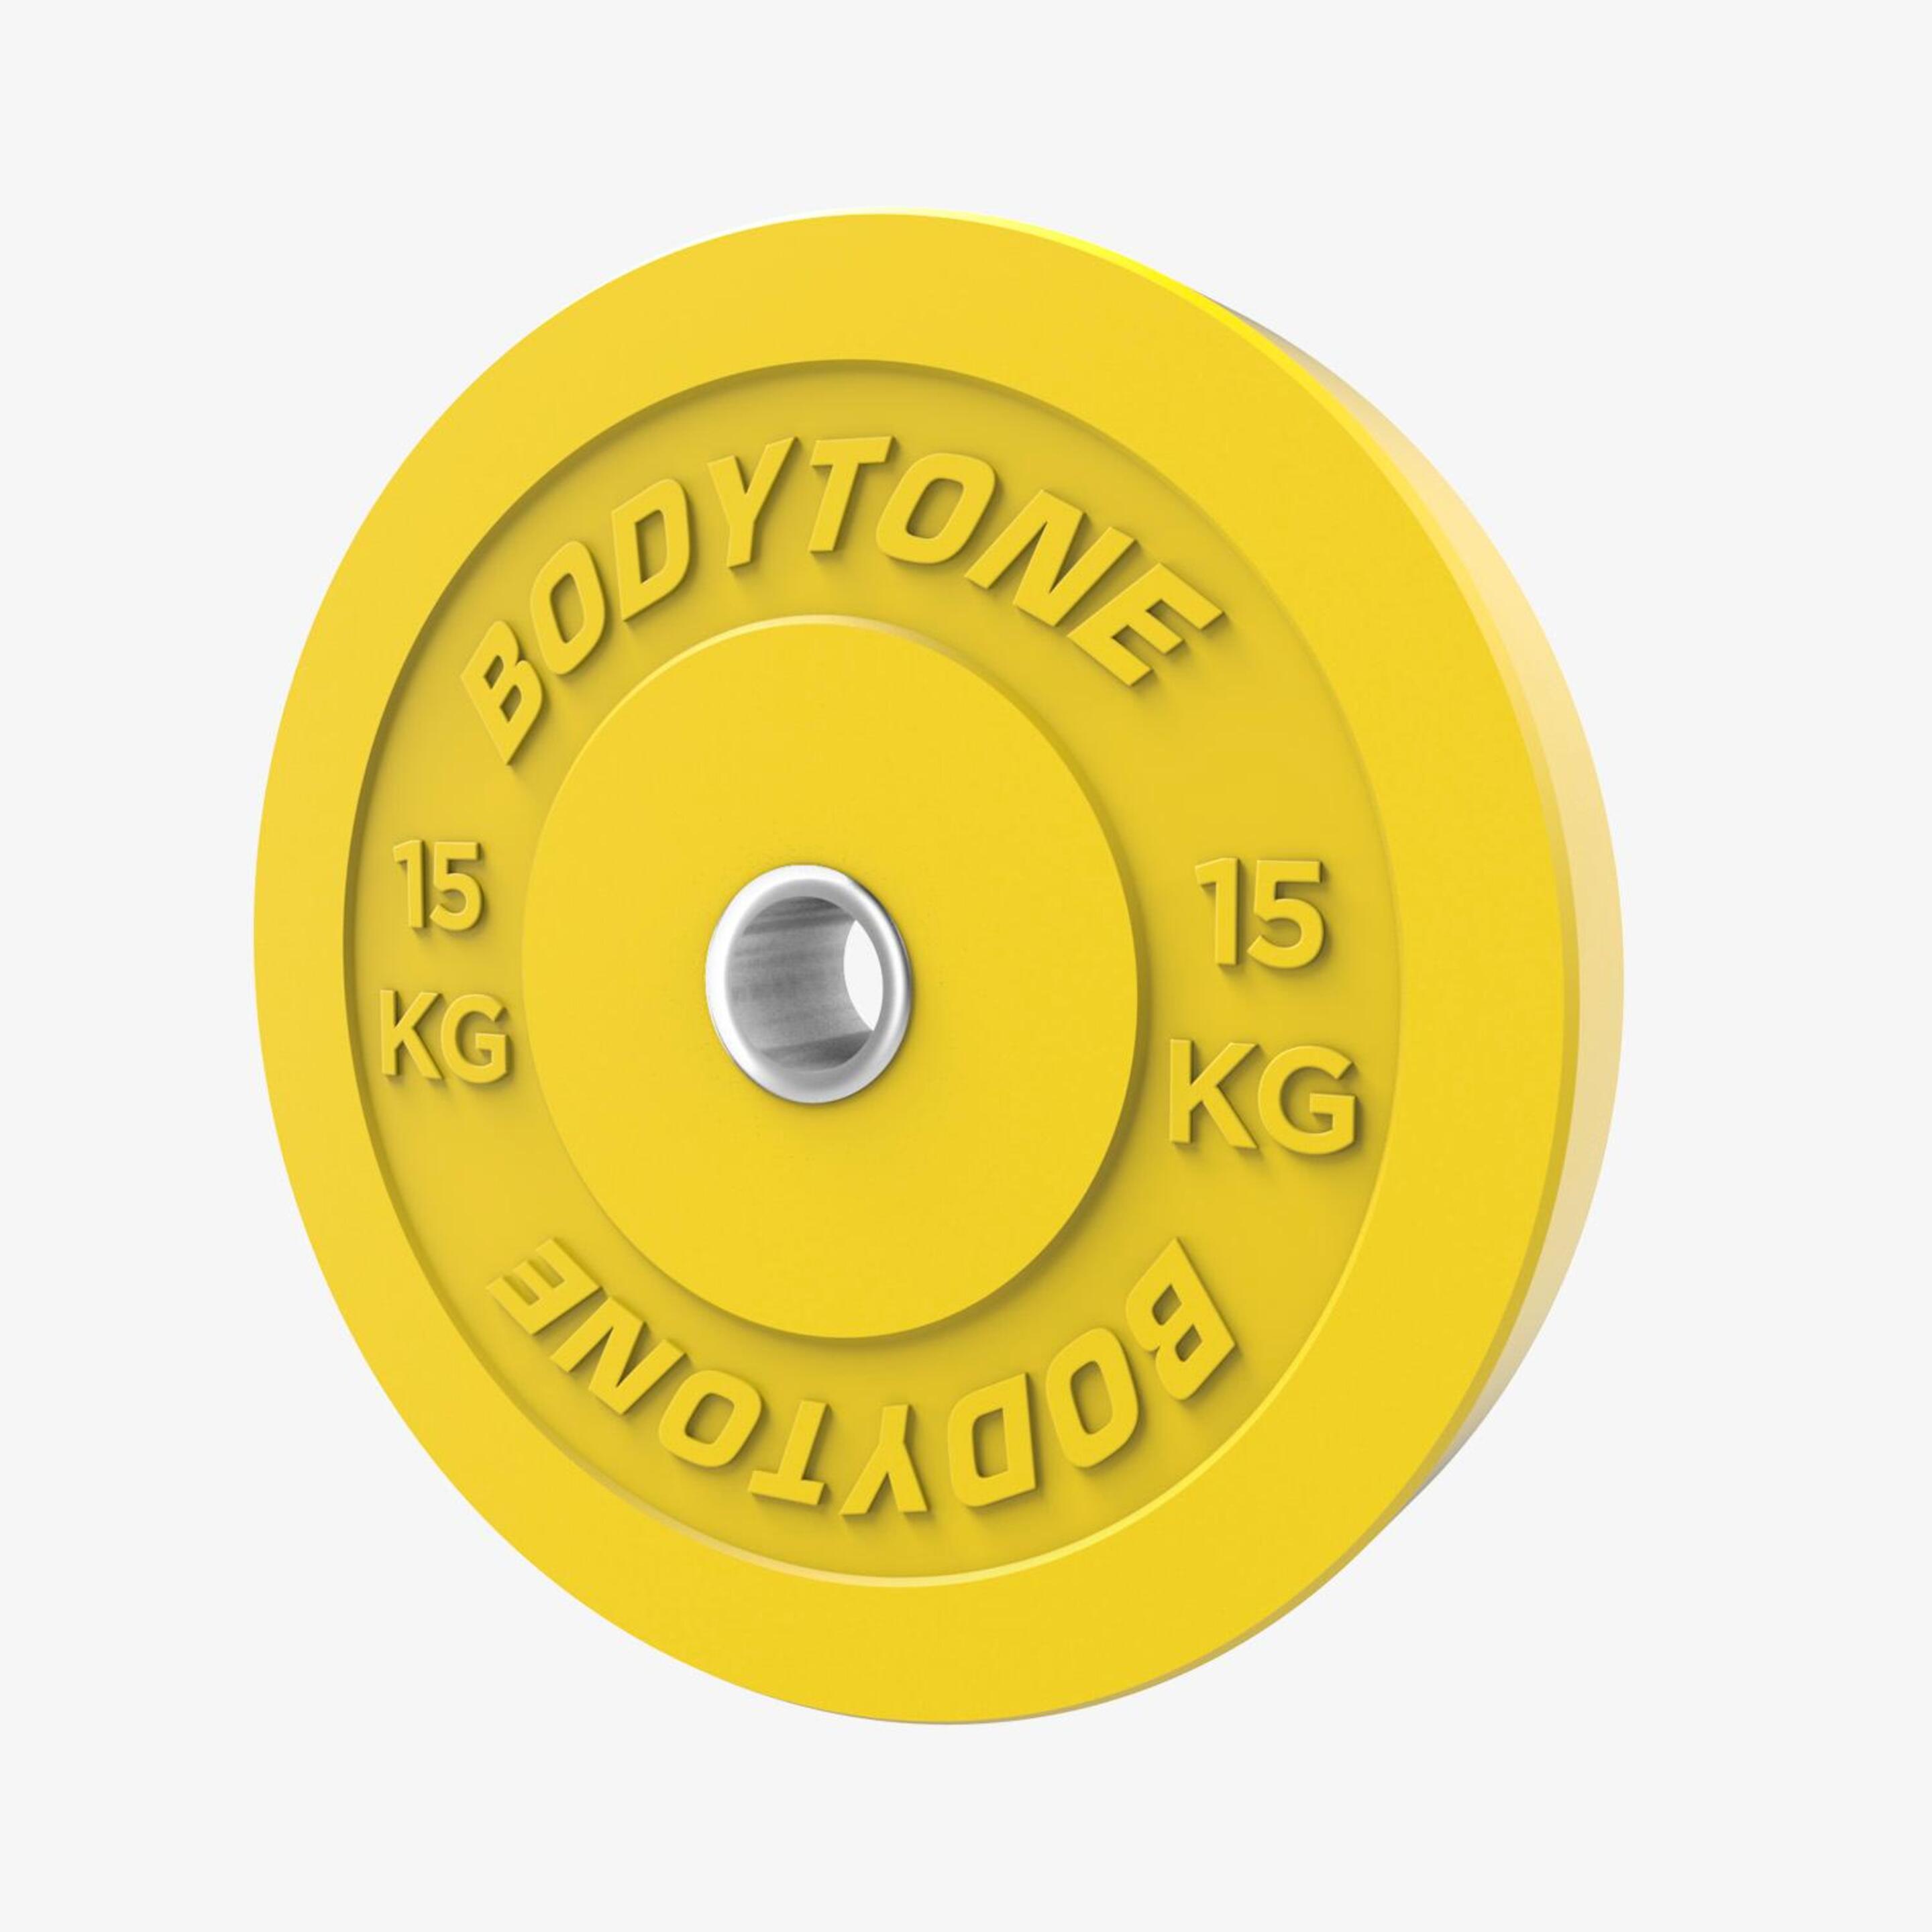 Disco 15 Kg Bodytone 50mm - amarillo - 